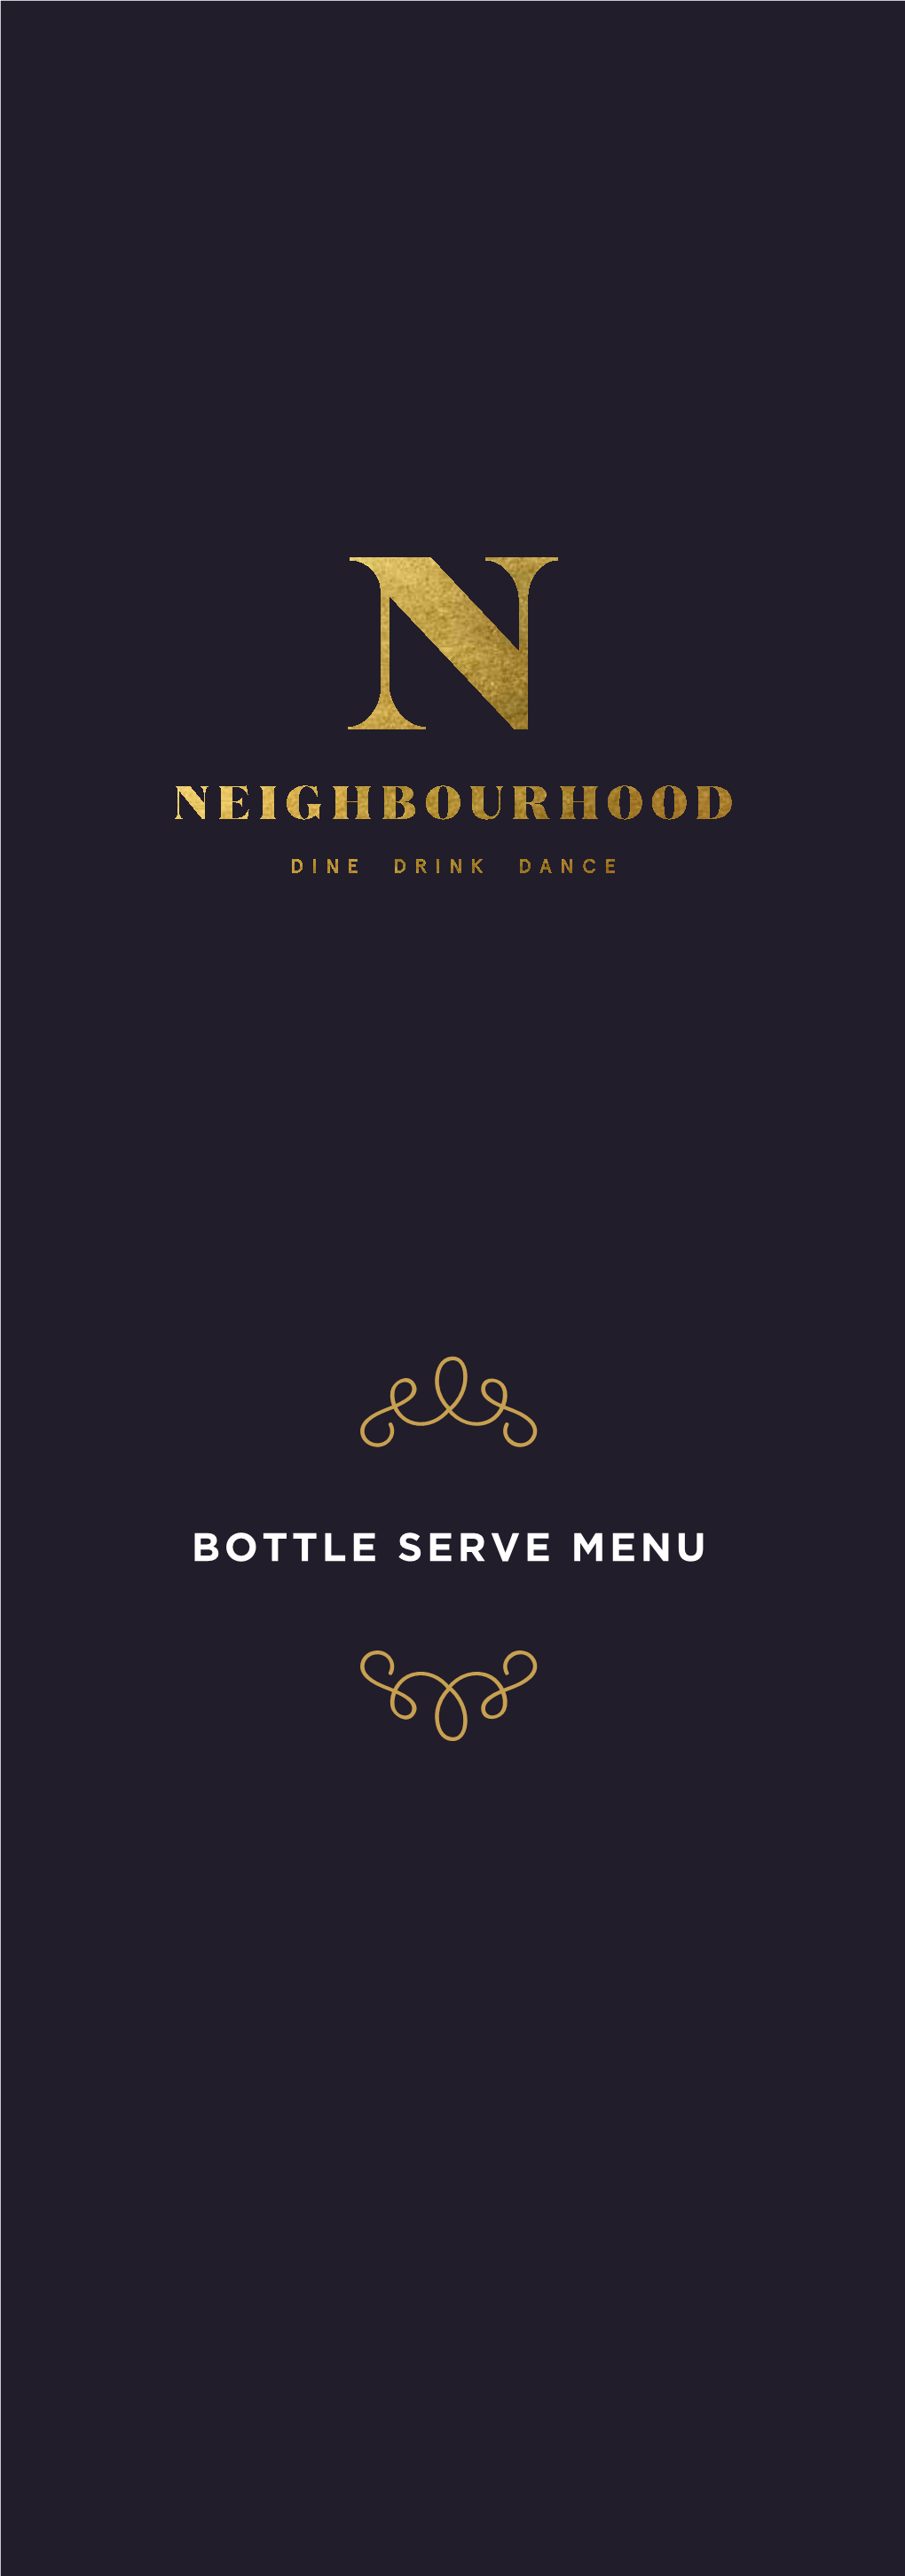 Bottle Serve Menu